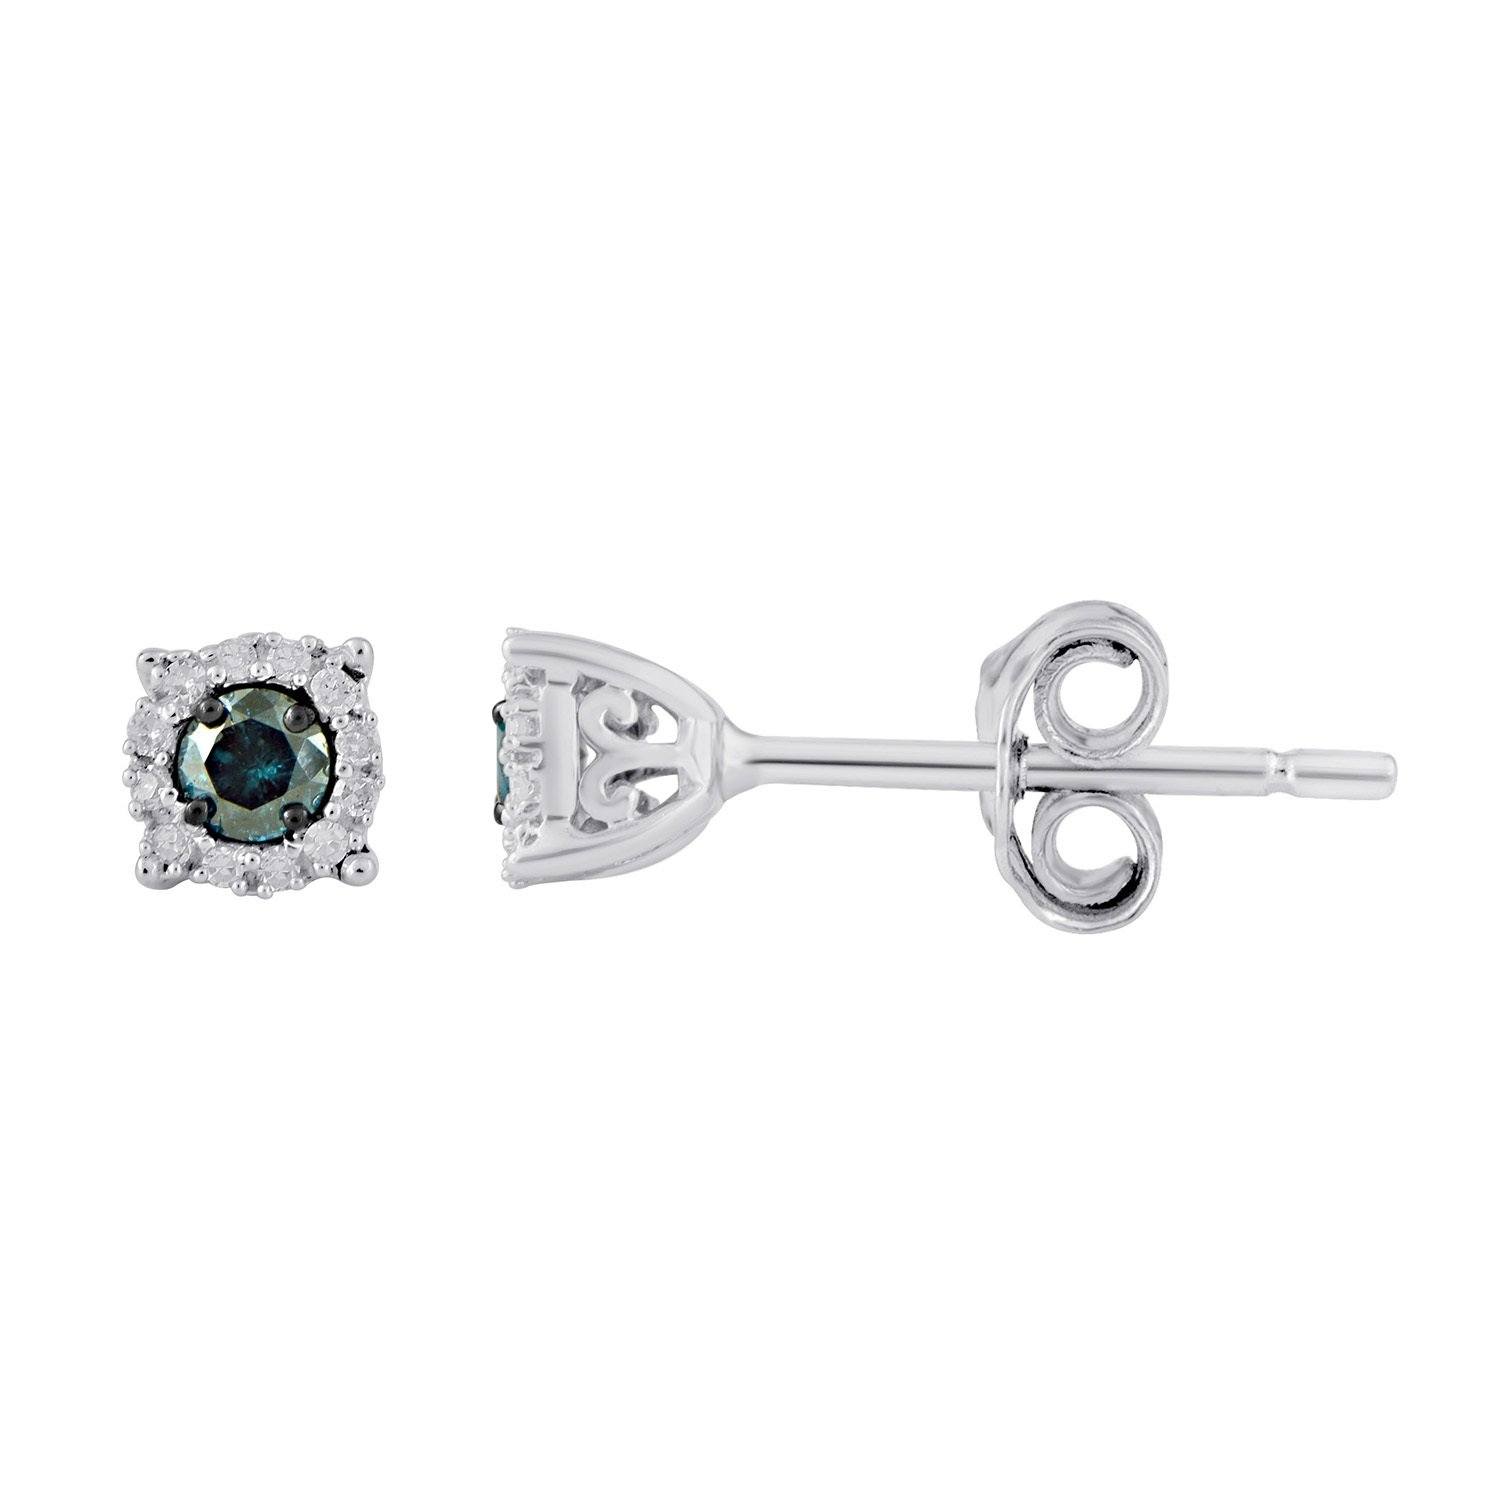 Halo Stud Earrings with 1/4ct of Diamonds in Sterling Silver Earrings Bevilles 